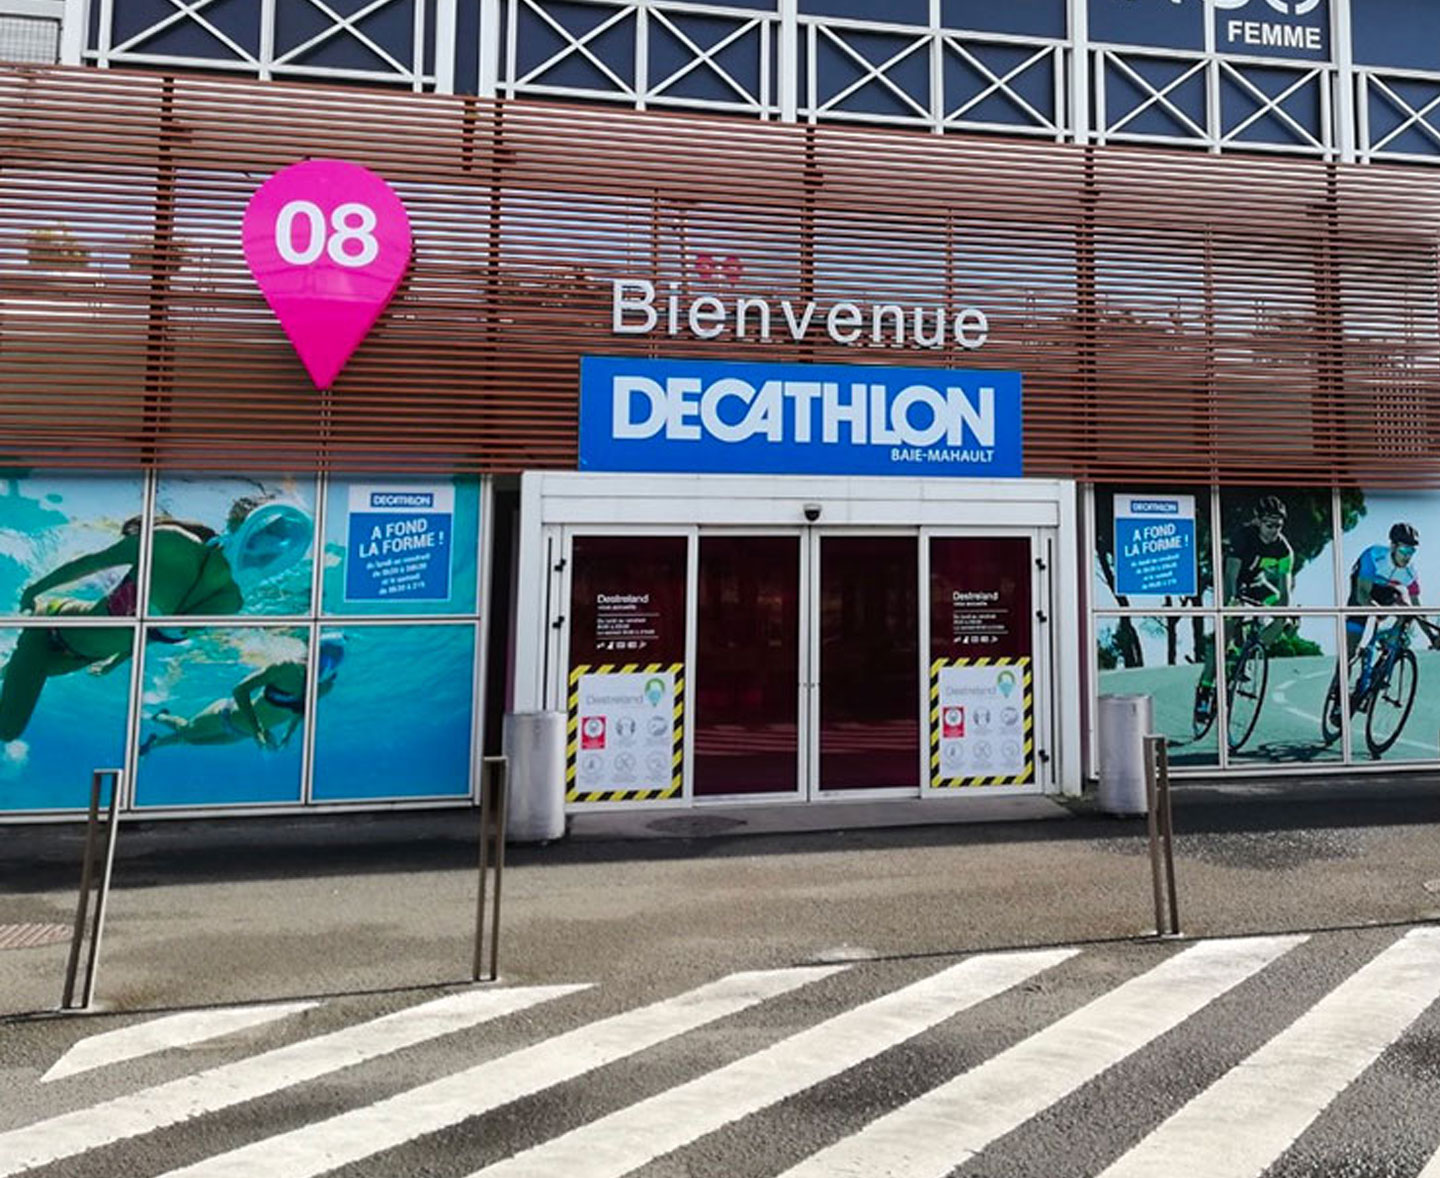 Decathlon Guadeloupe - 𝗖𝗢𝗠𝗠𝗘𝗡𝗧 𝗖𝗛𝗢𝗜𝗦𝗜𝗥 𝗦𝗘𝗦